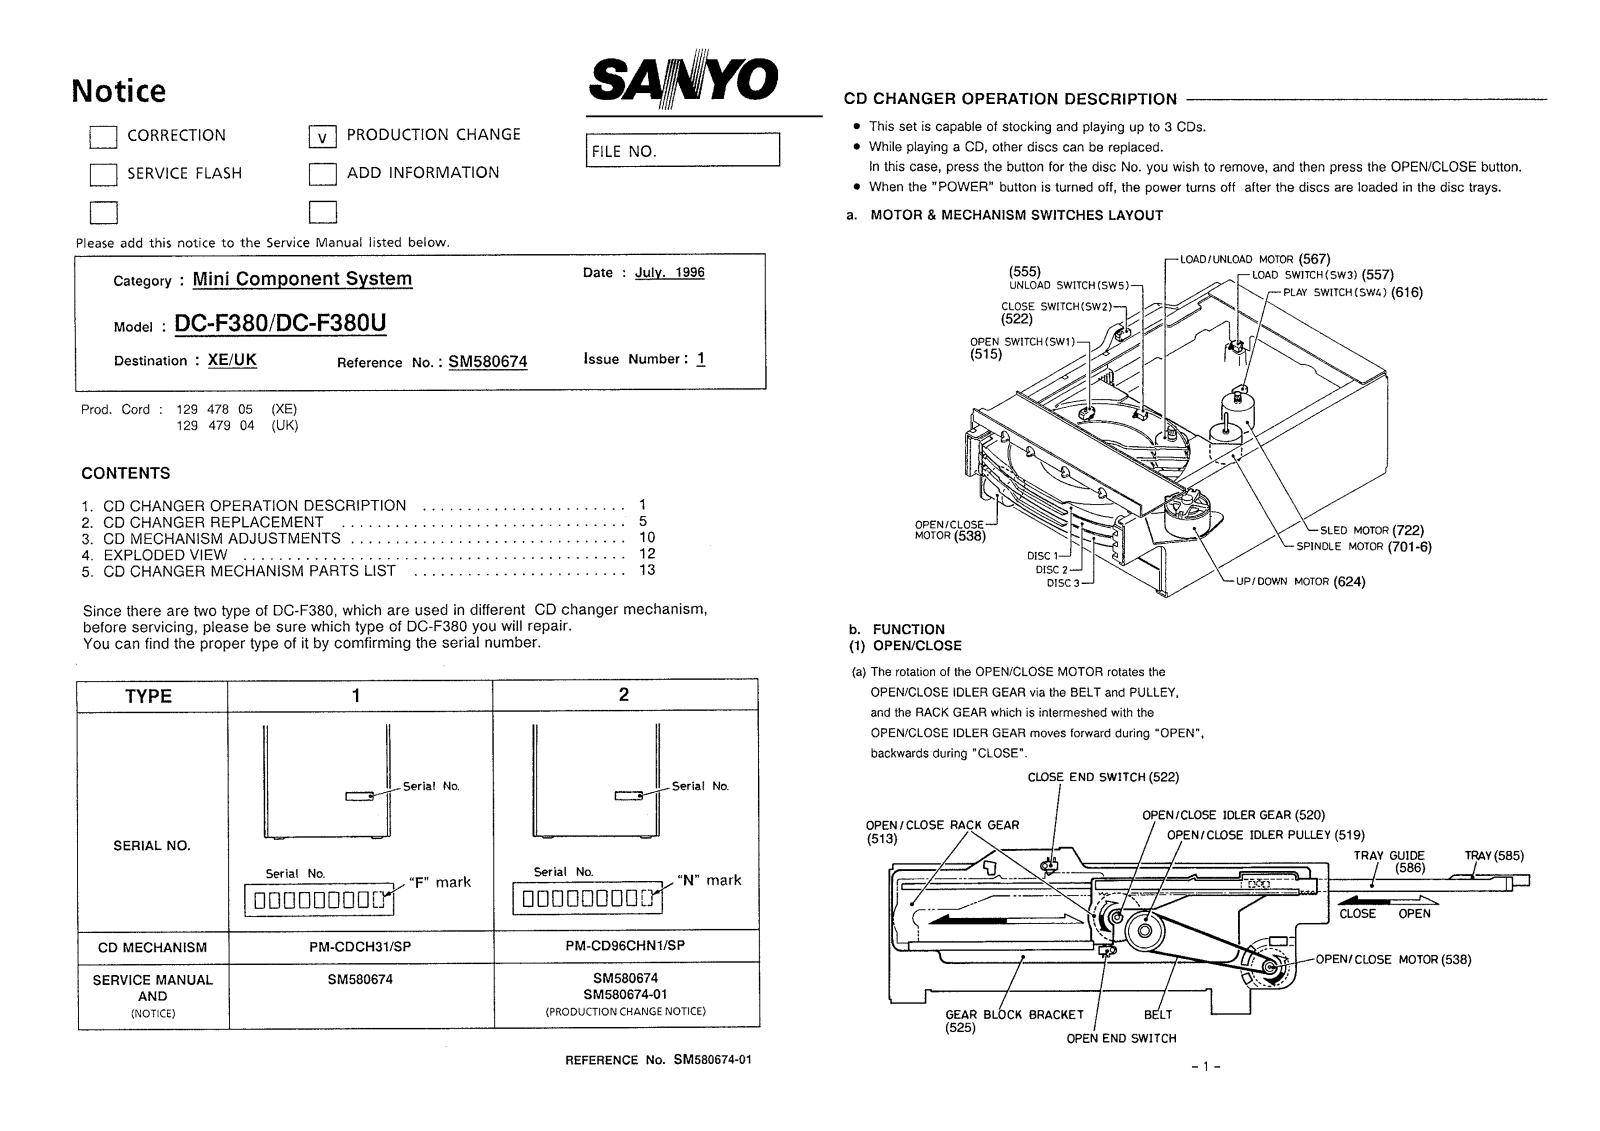 Sanyo DC-F380, DC-F380U Service Manual